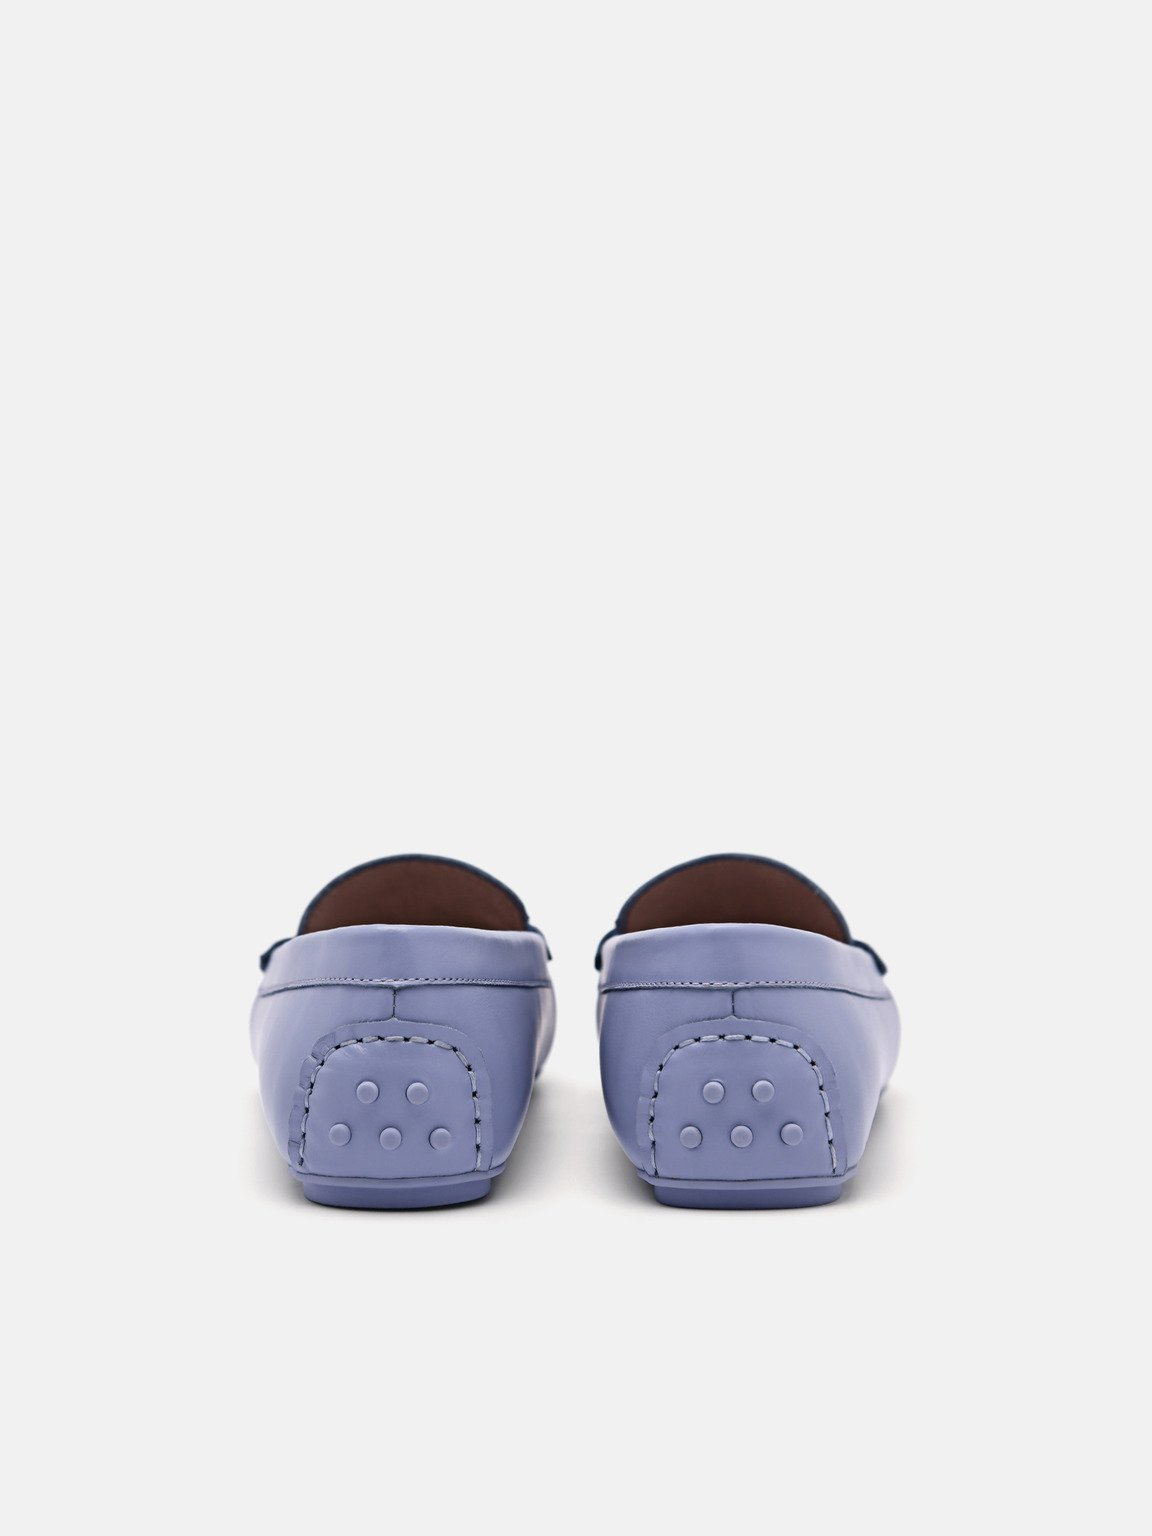 PEDRO標誌皮革駕駛鞋, 紫羅蘭色